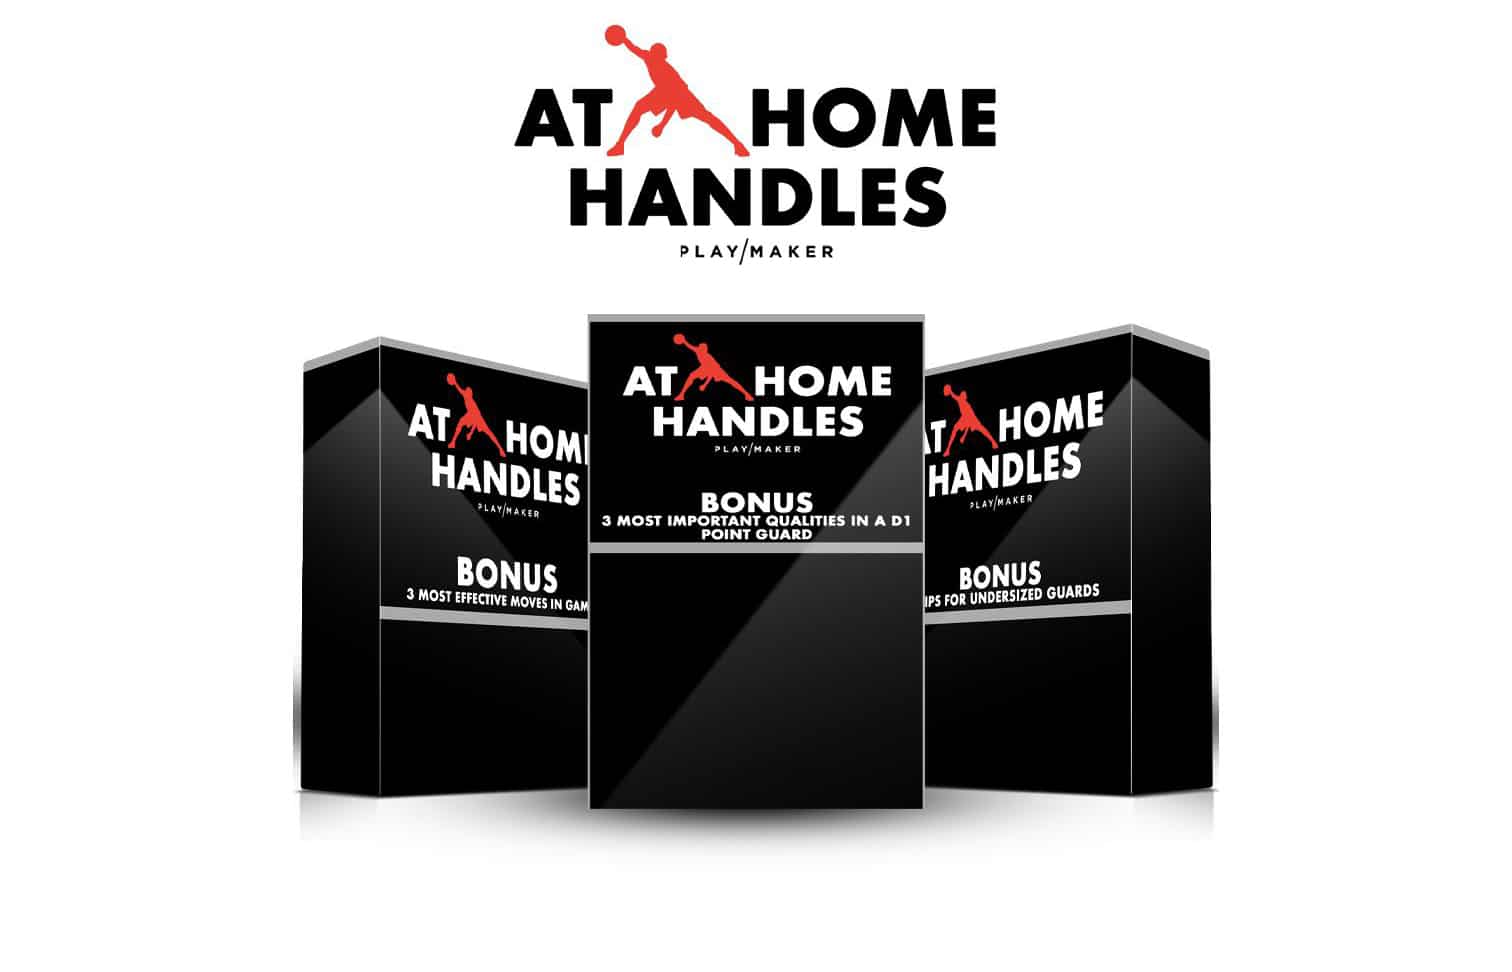 At Home Handles – Bonuses